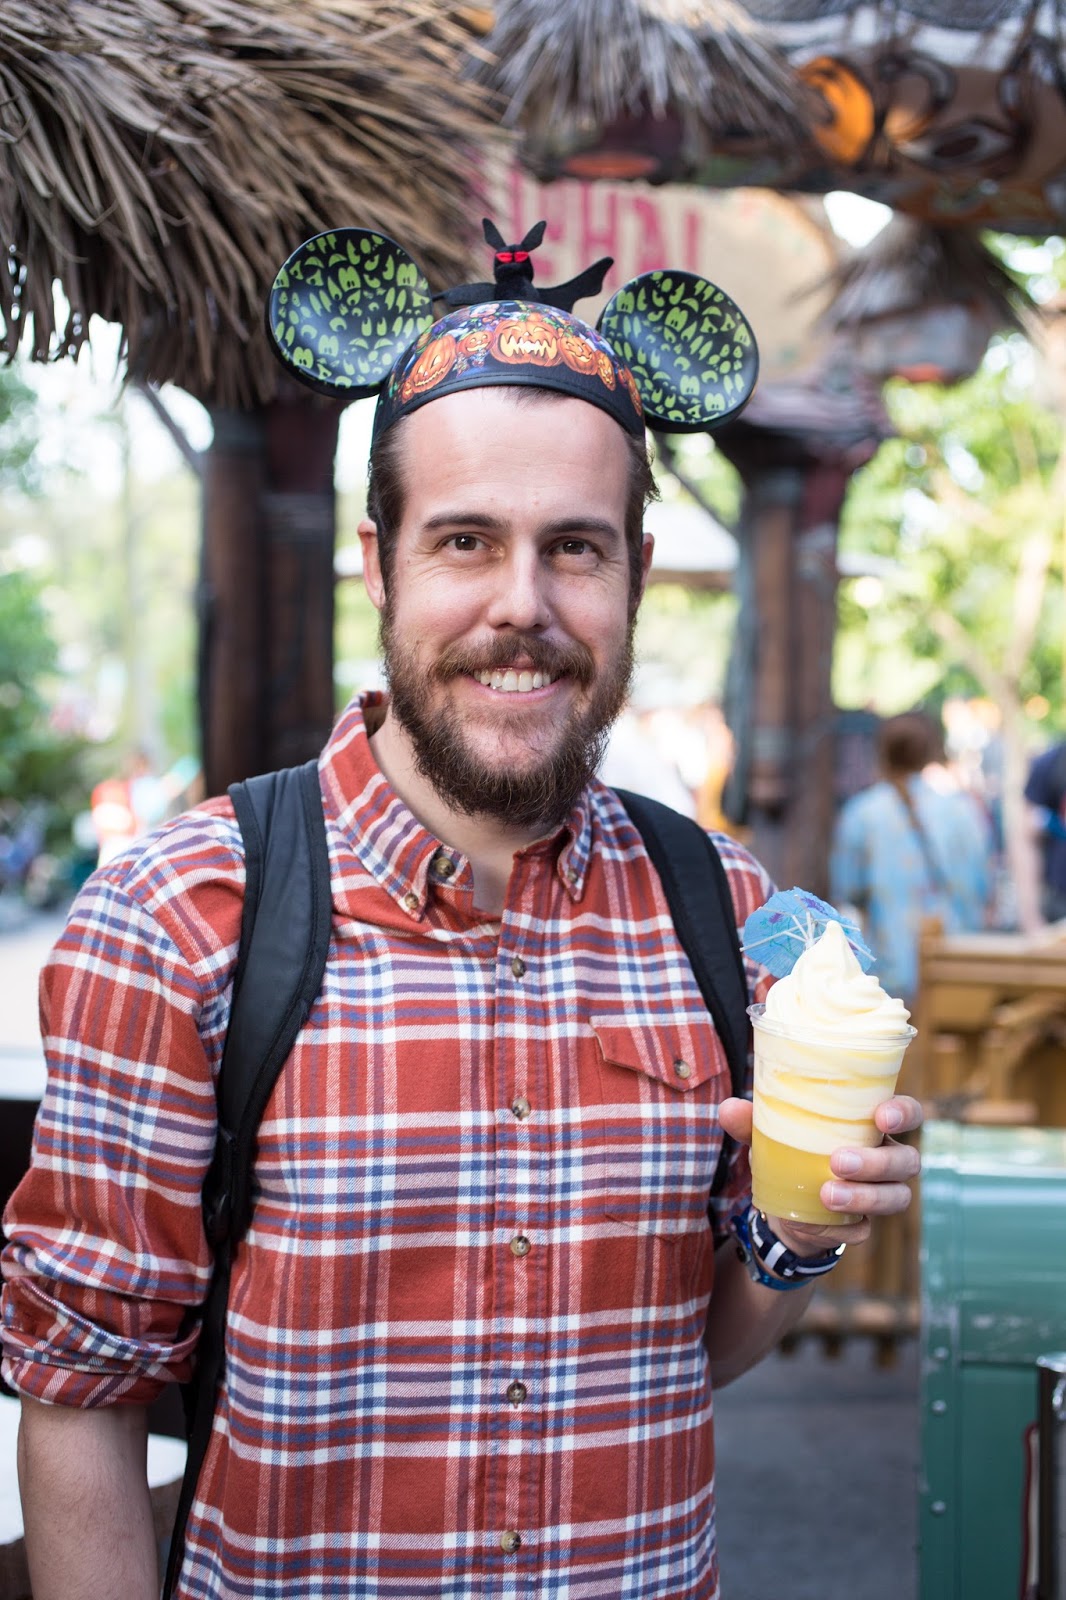 Disneyland Food Guide: Dole Whip